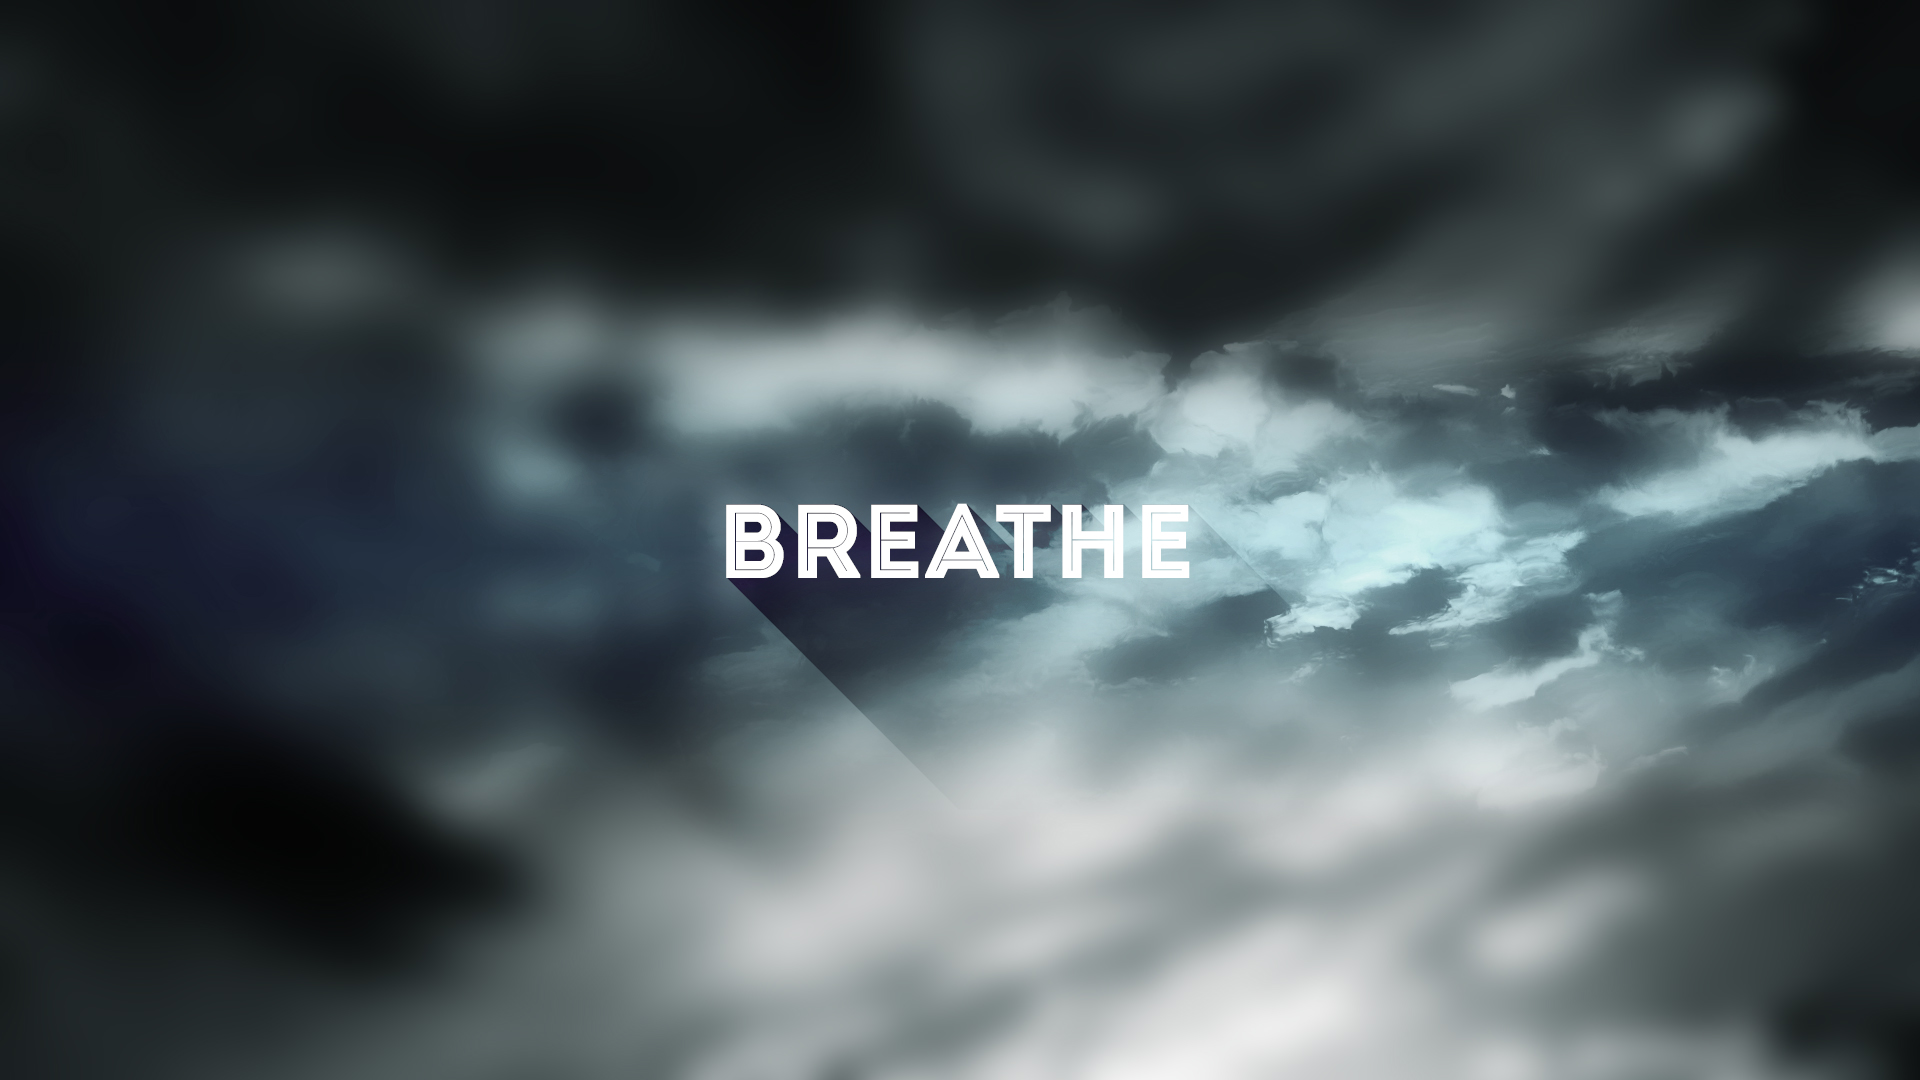 Breathe [1920x1080] wallpapers